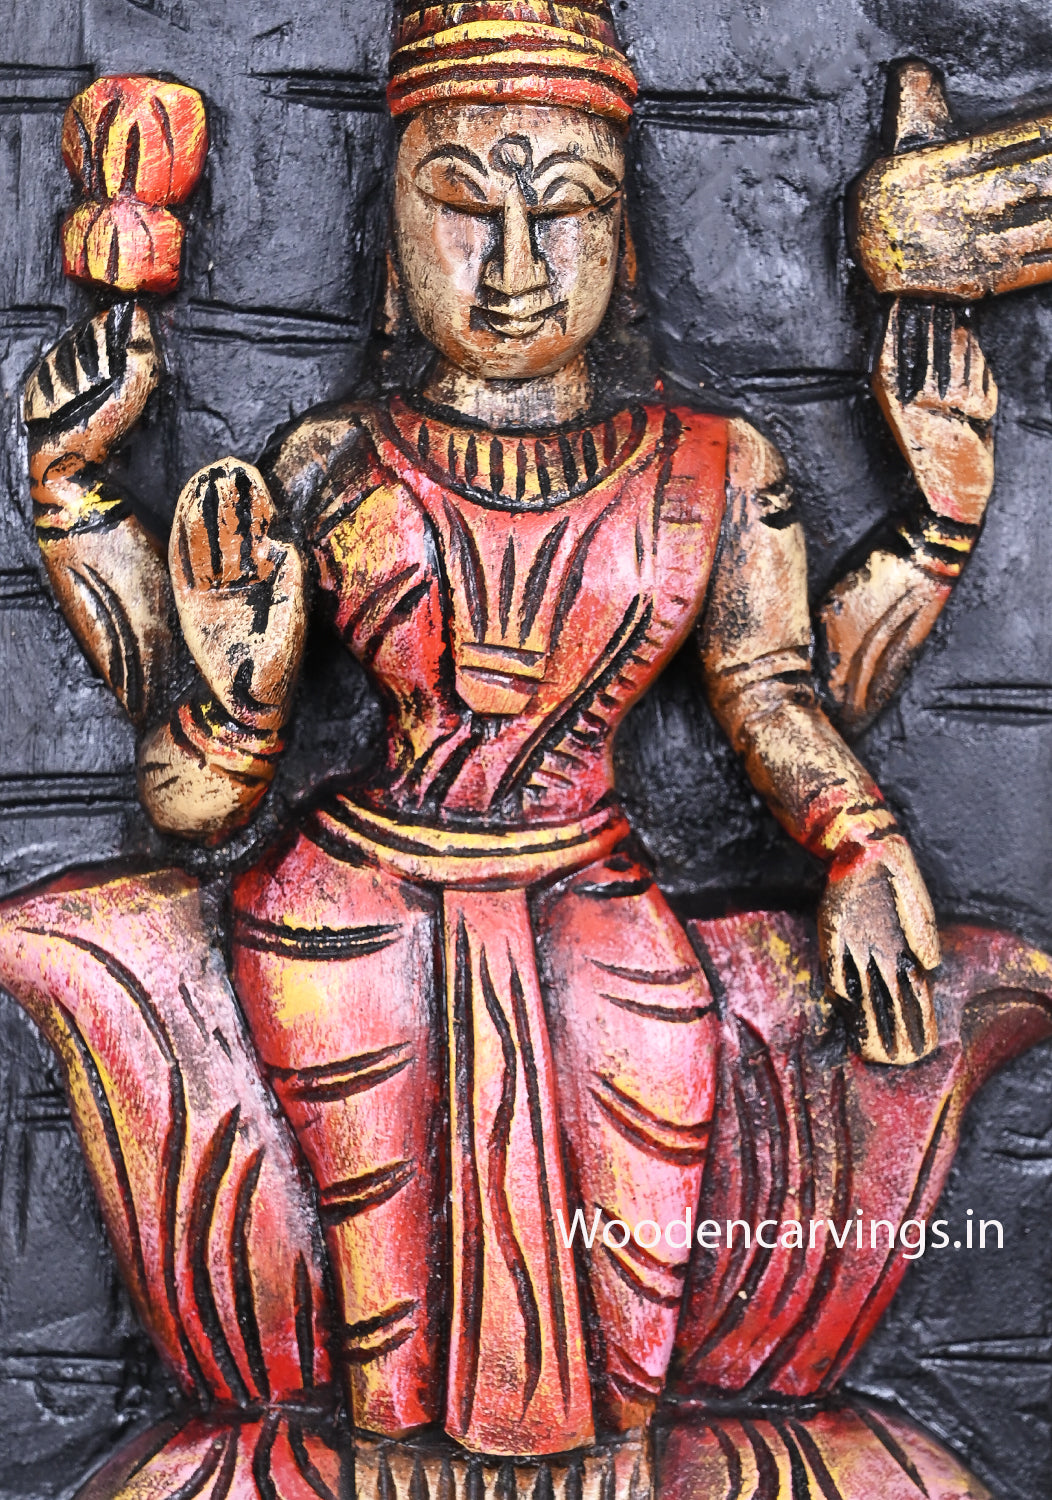 Colourful Vertical Asta Lakshmi Seated on Petal Lotus Handmade Vertical Home Decor Wooden Wall Panel 48"